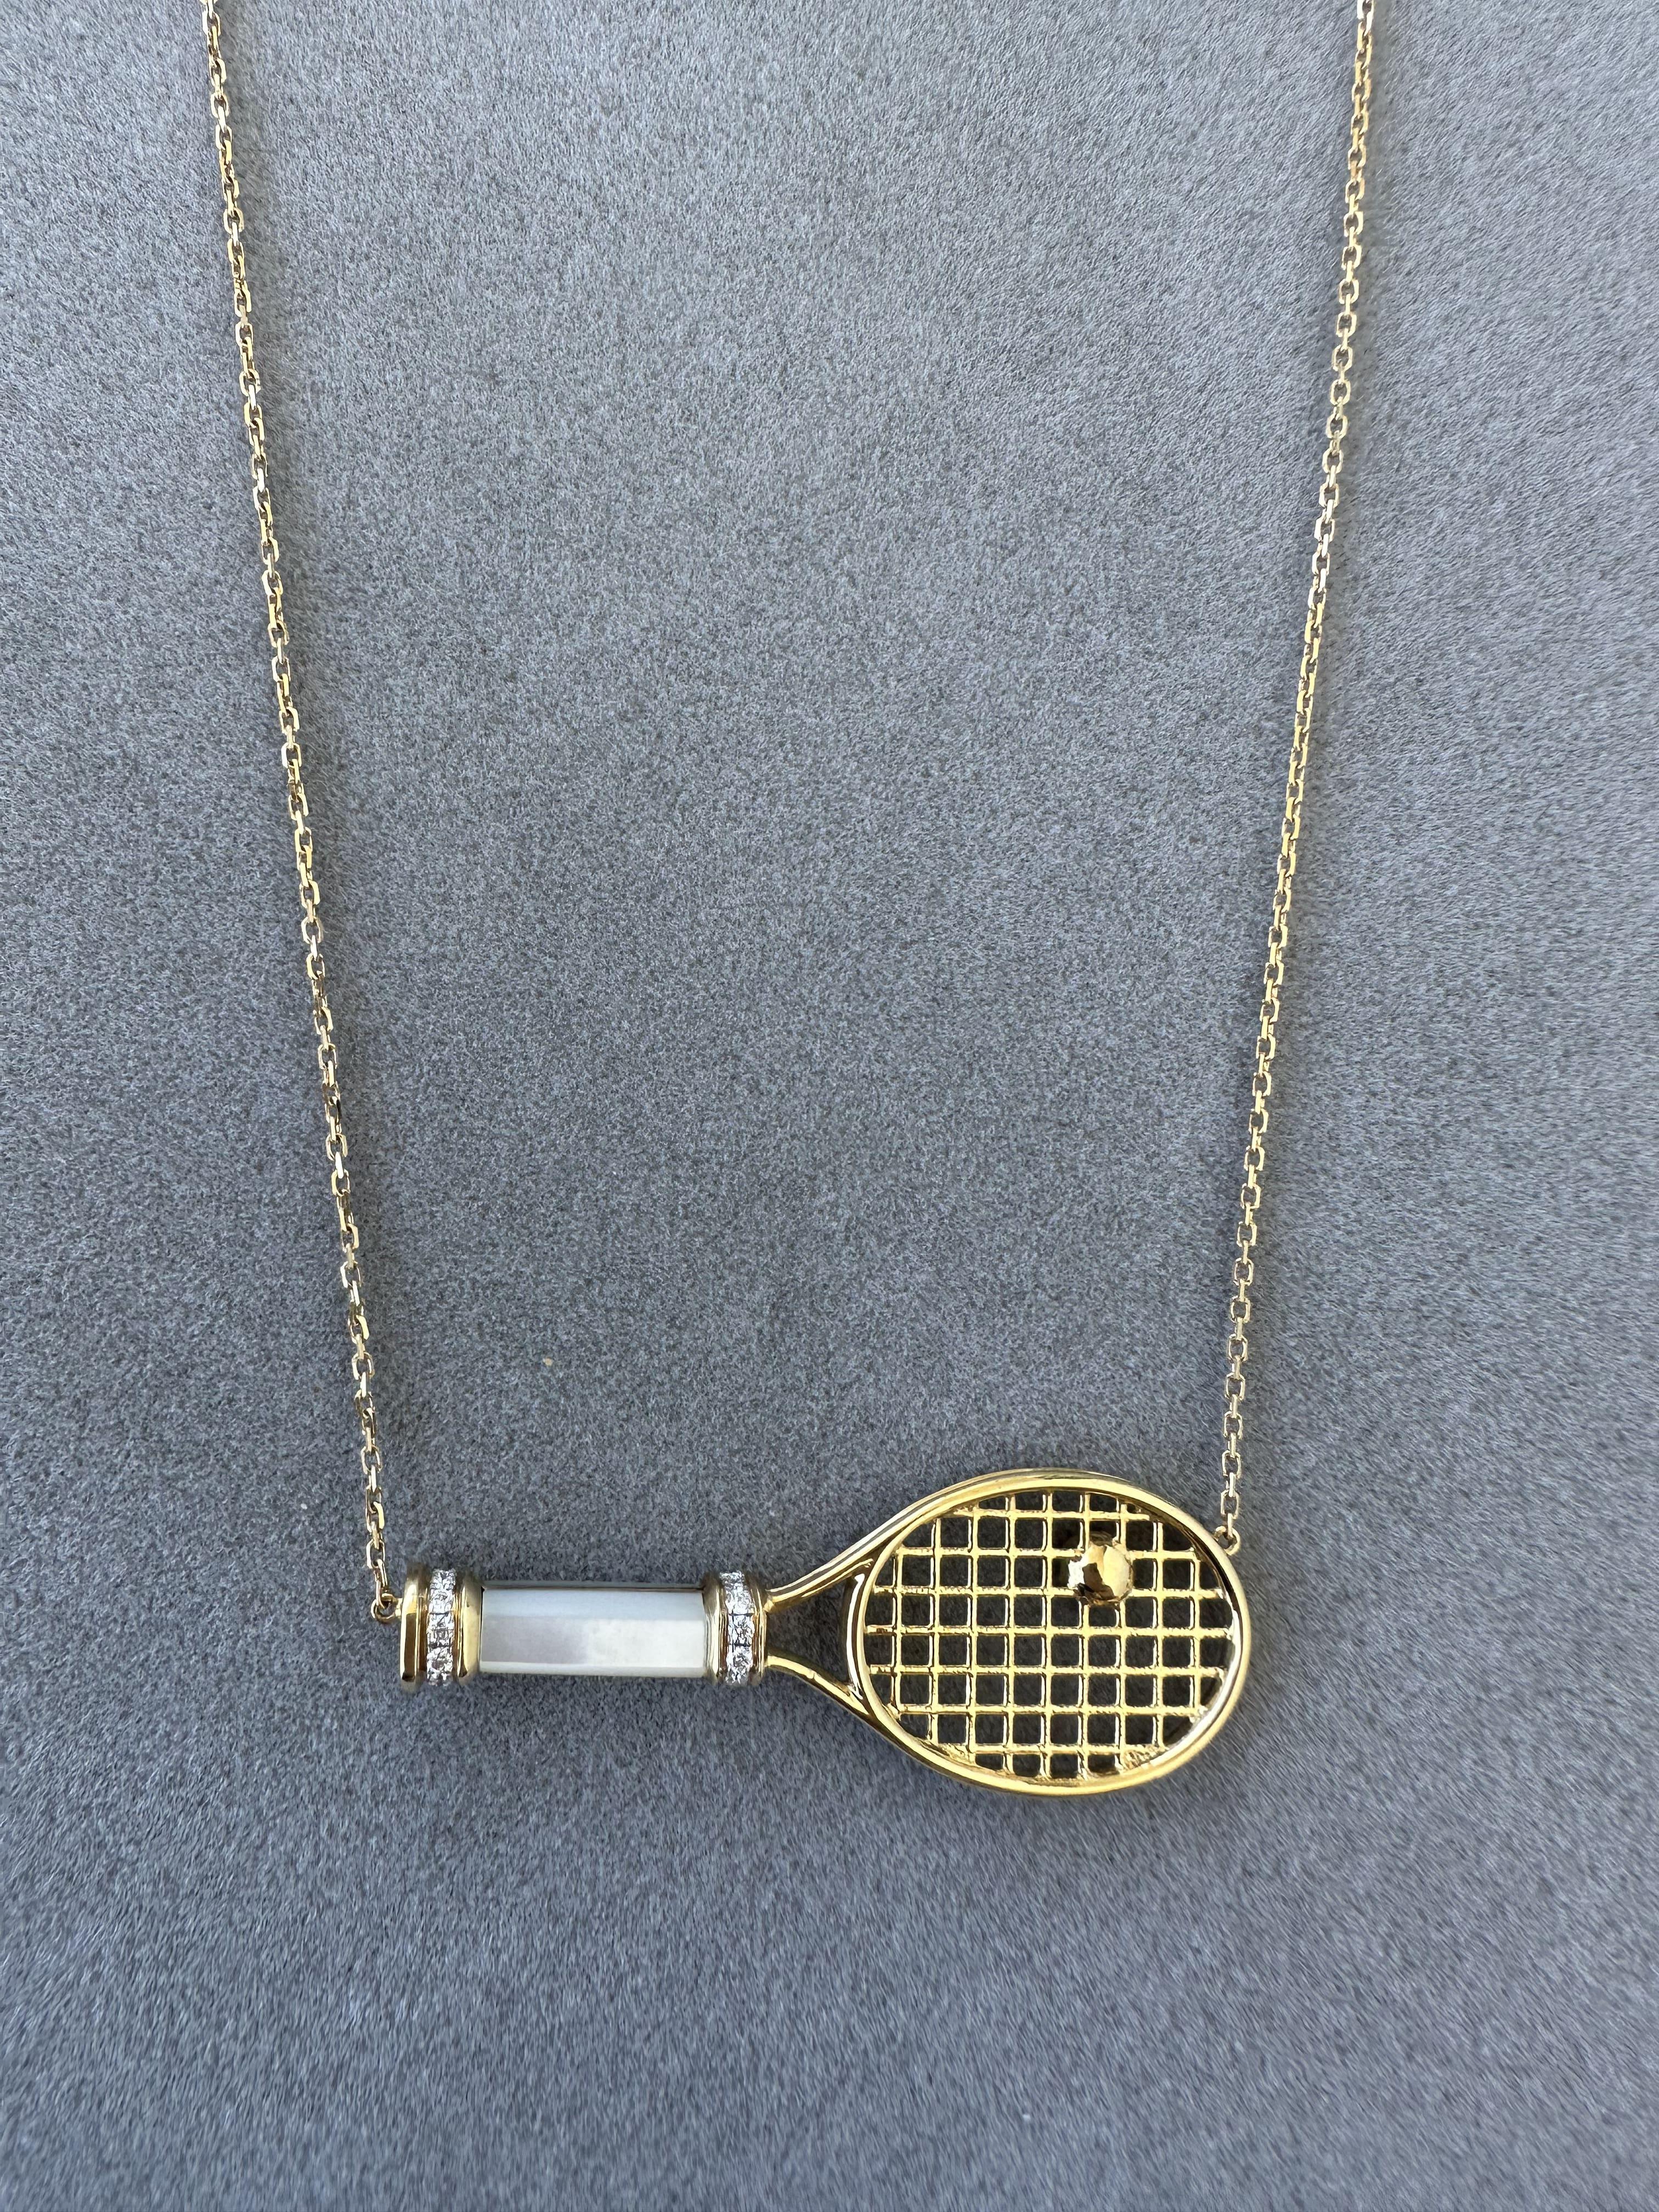 Diamond White Pearl Emerald 18 Karat Gold Tennis Racket Charm Pendant Necklace For Sale 3